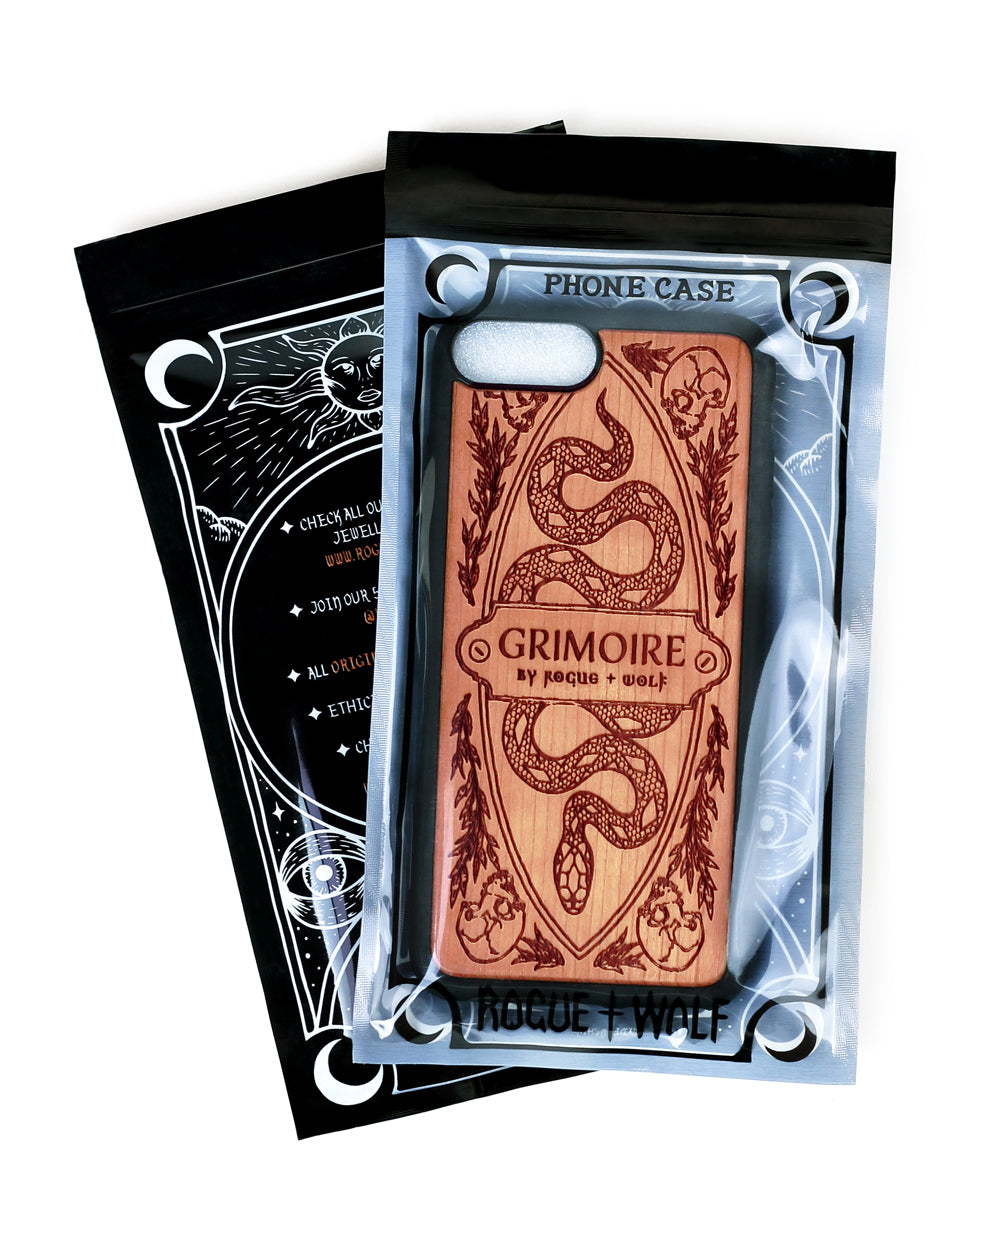 Grimoire - Engraved Cherry Wood Phone Case